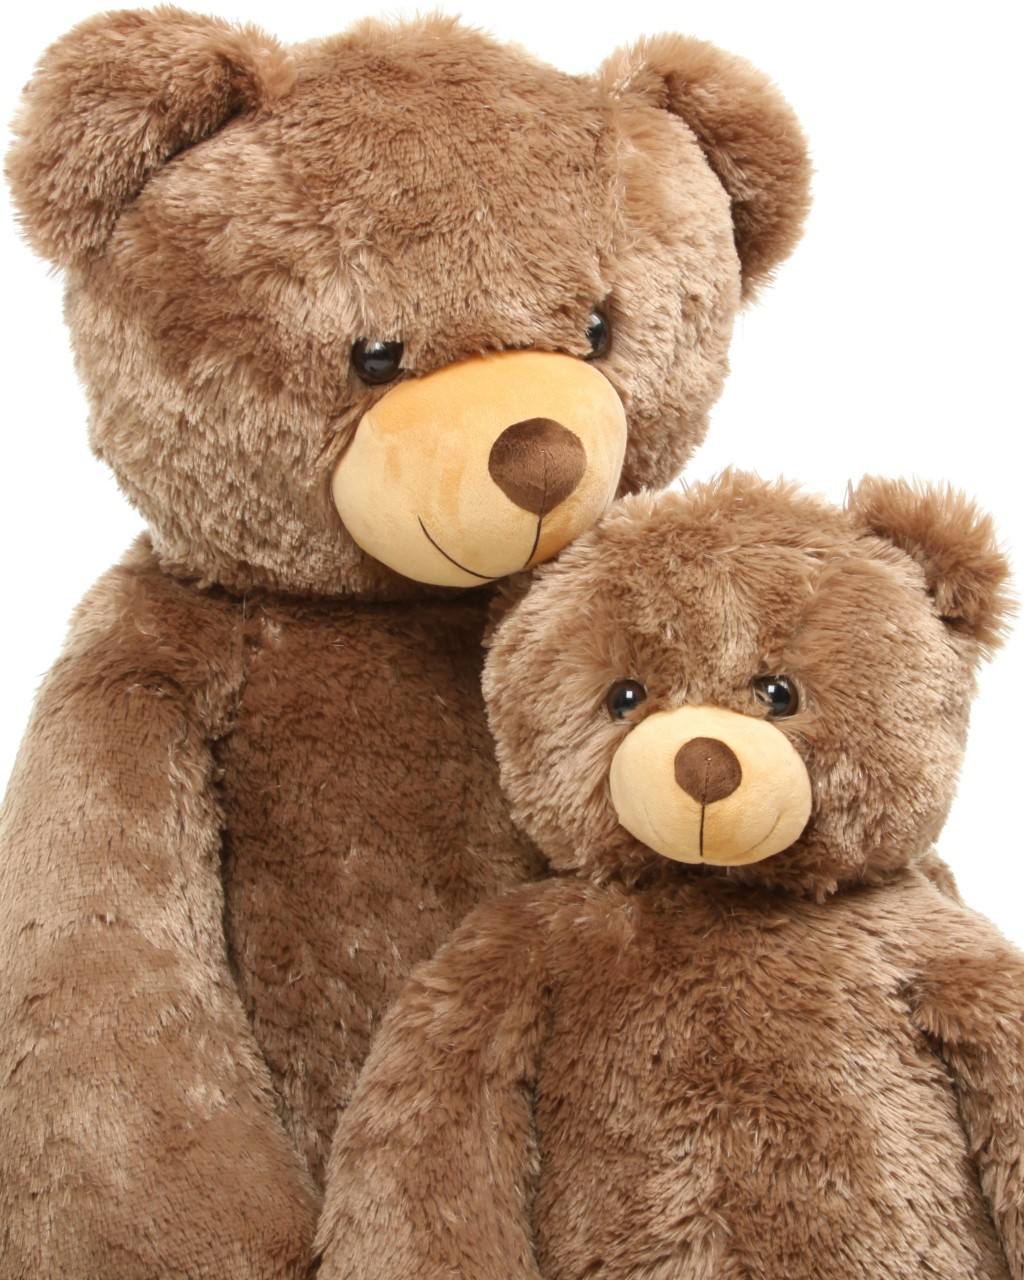 Sweetie Tubs 52 Mocha Brown Huge Plush Teddy Bear Giant Teddy Bear